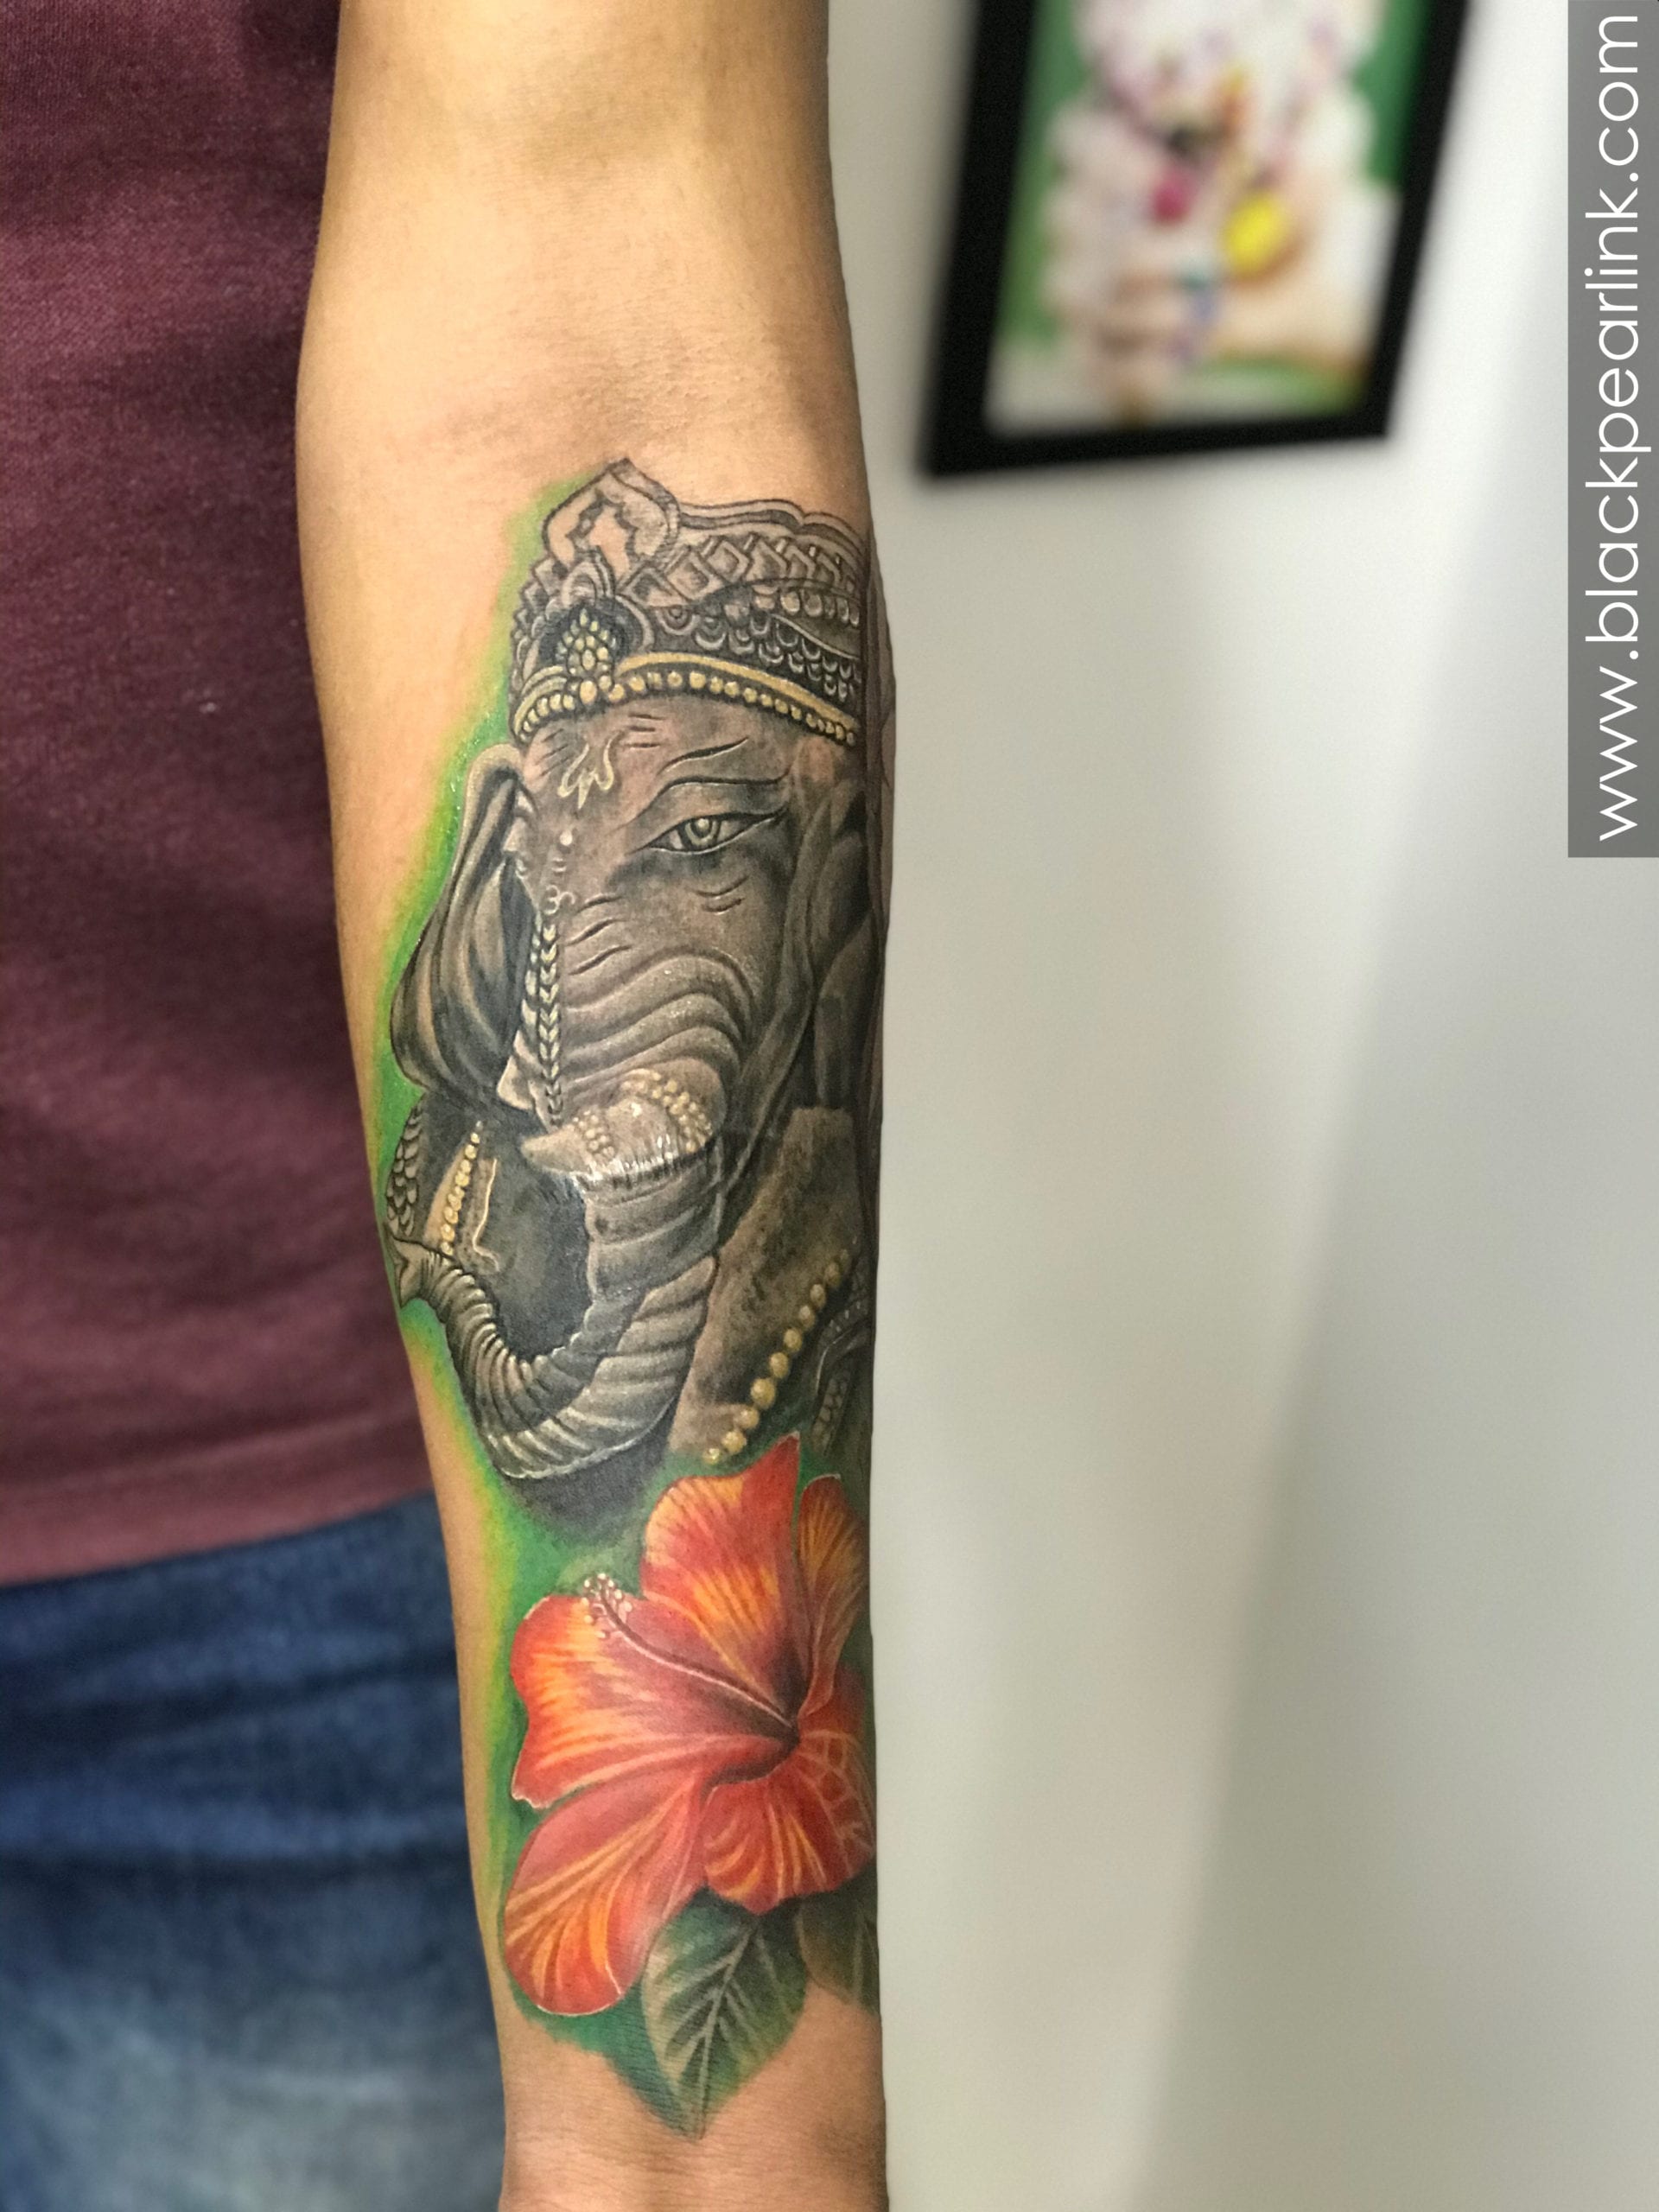 Statuesque Ganesha Tattoo on Forearm